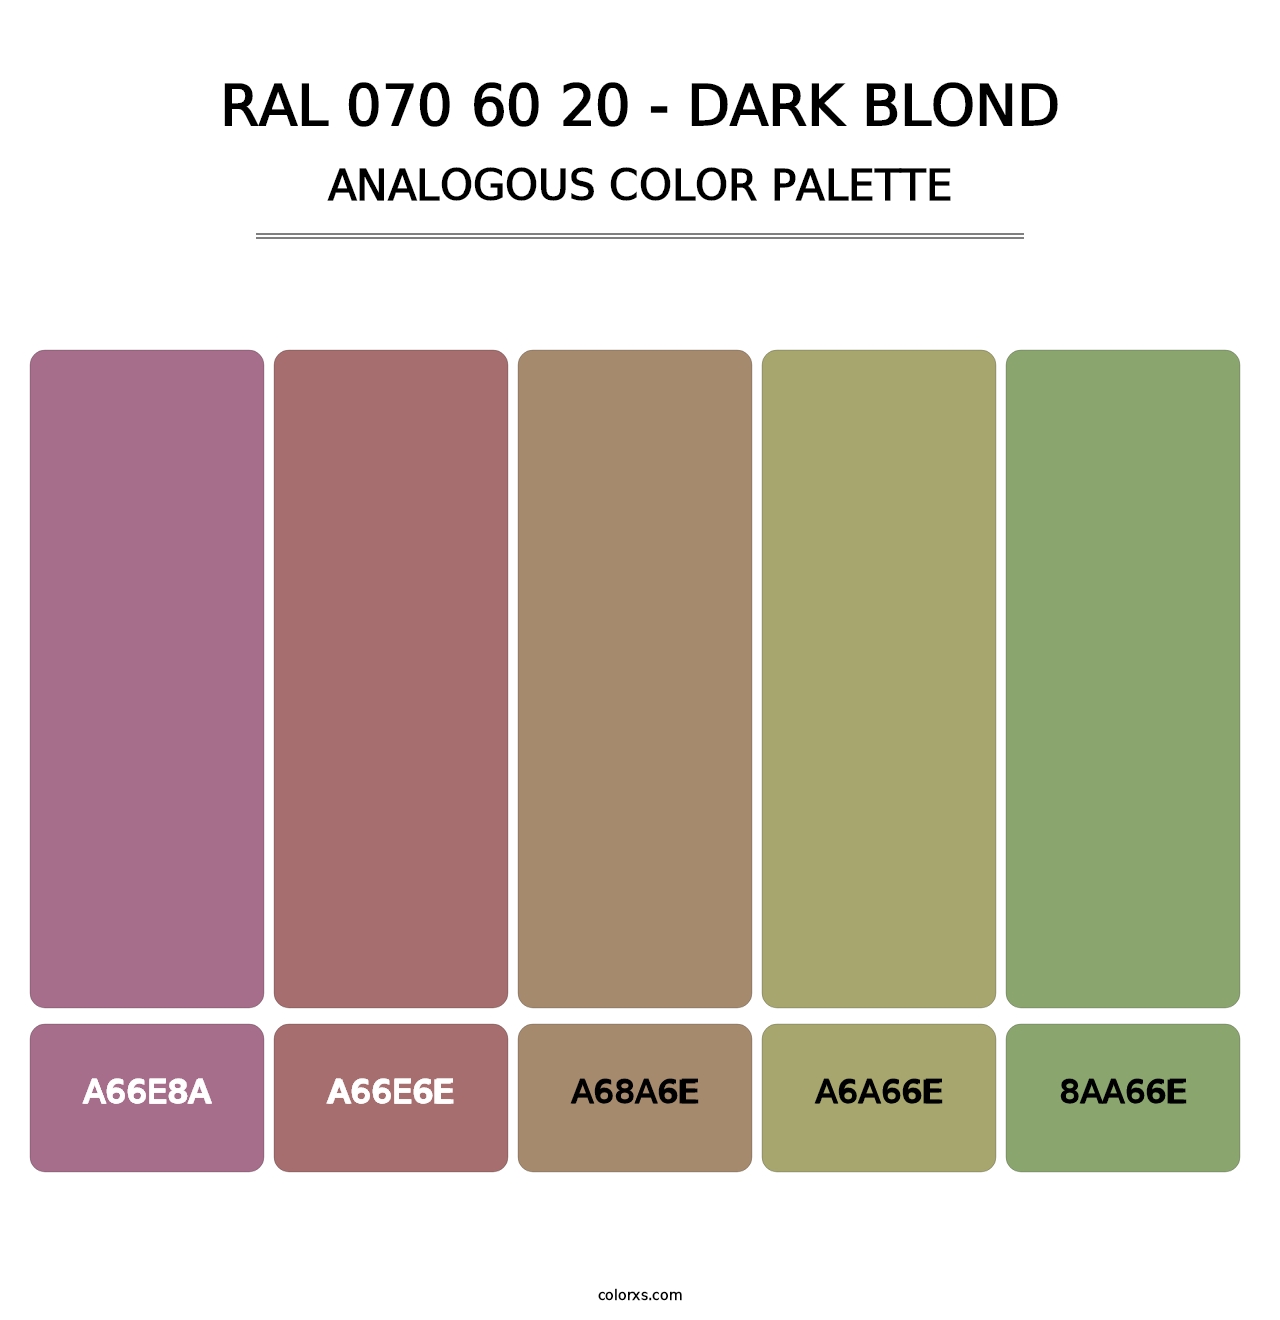 RAL 070 60 20 - Dark Blond - Analogous Color Palette